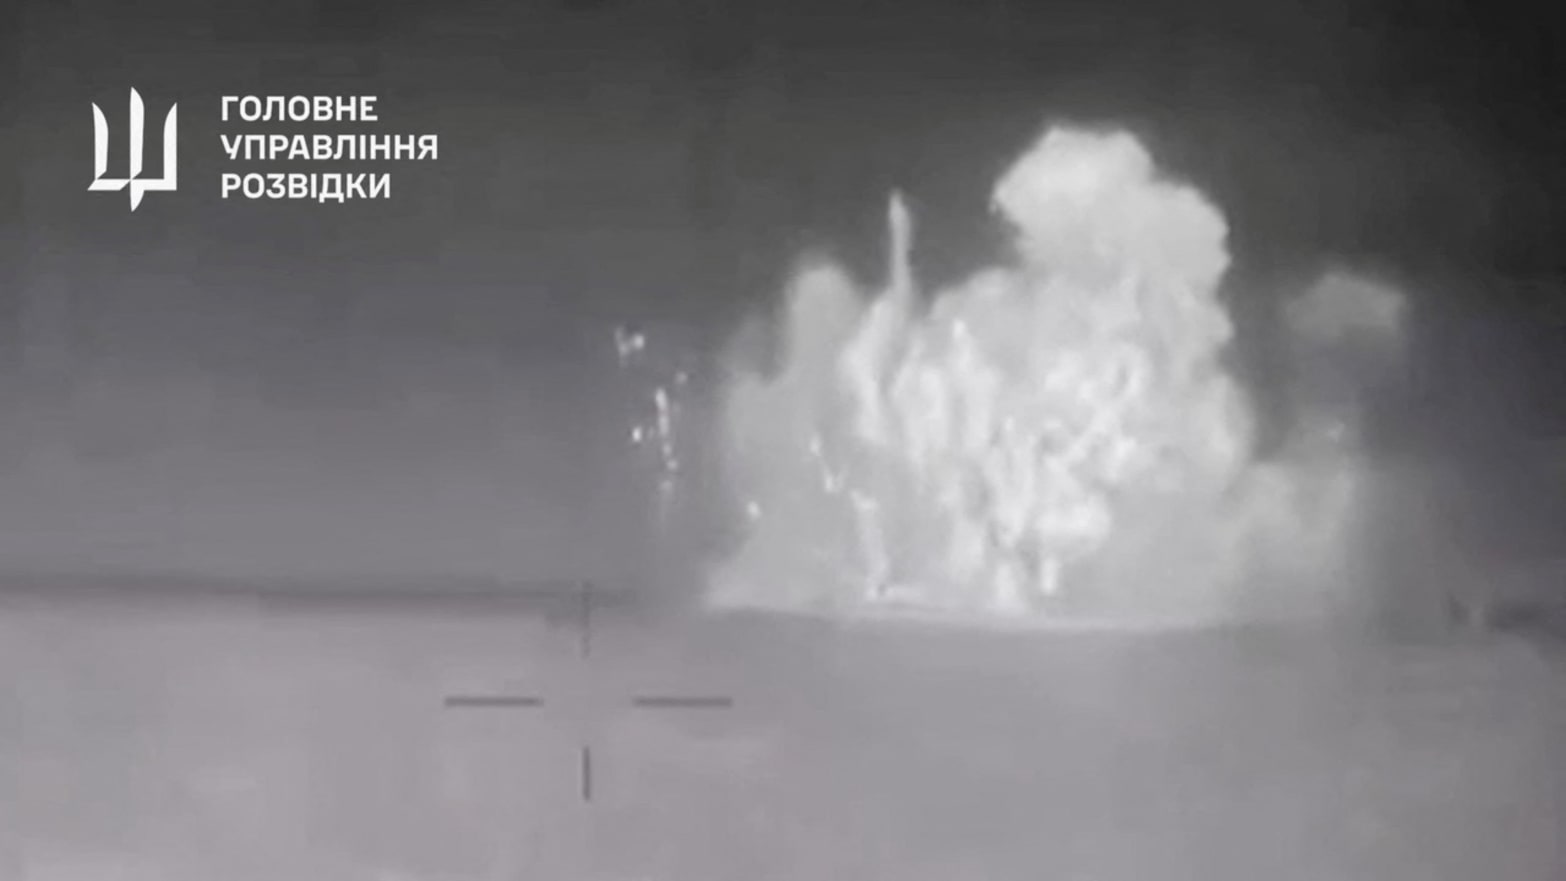 Handout footage shows an explosion on what Ukrainian military intelligence said is the Russian Black Sea Fleet patrol ship Sergei Kotov that was damaged by Ukrainian sea drones.